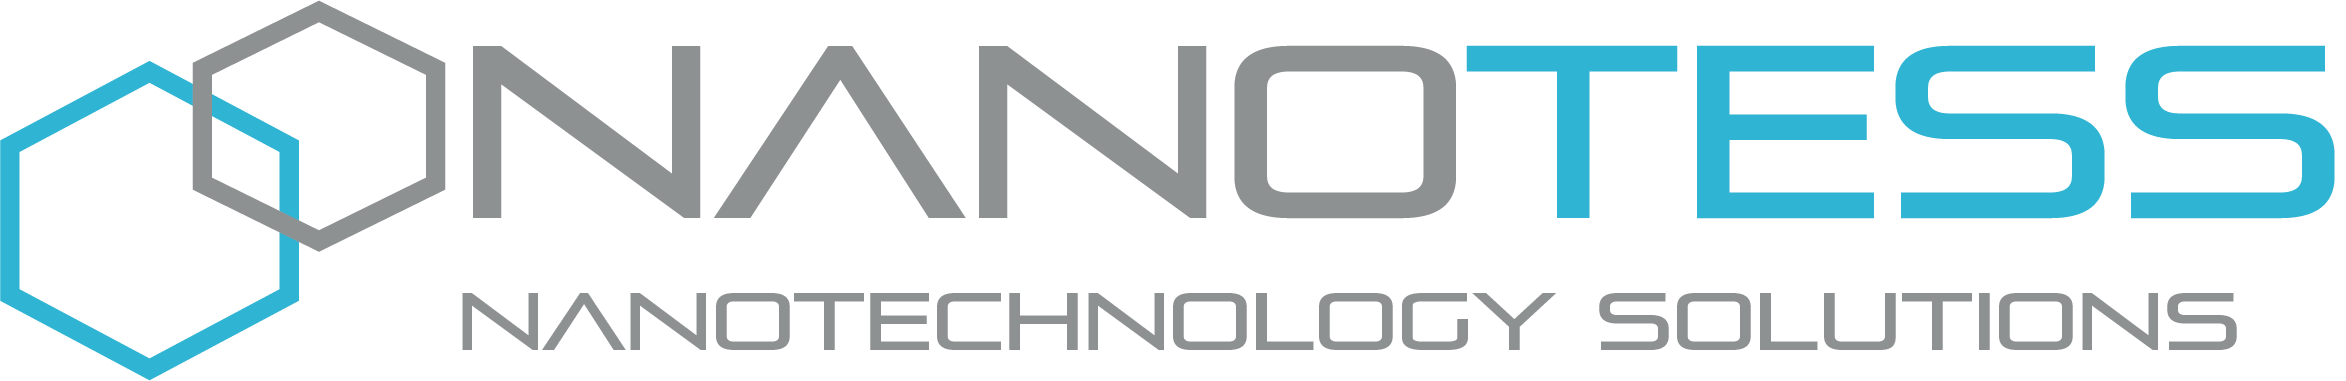 nanotess editable logo 20220228